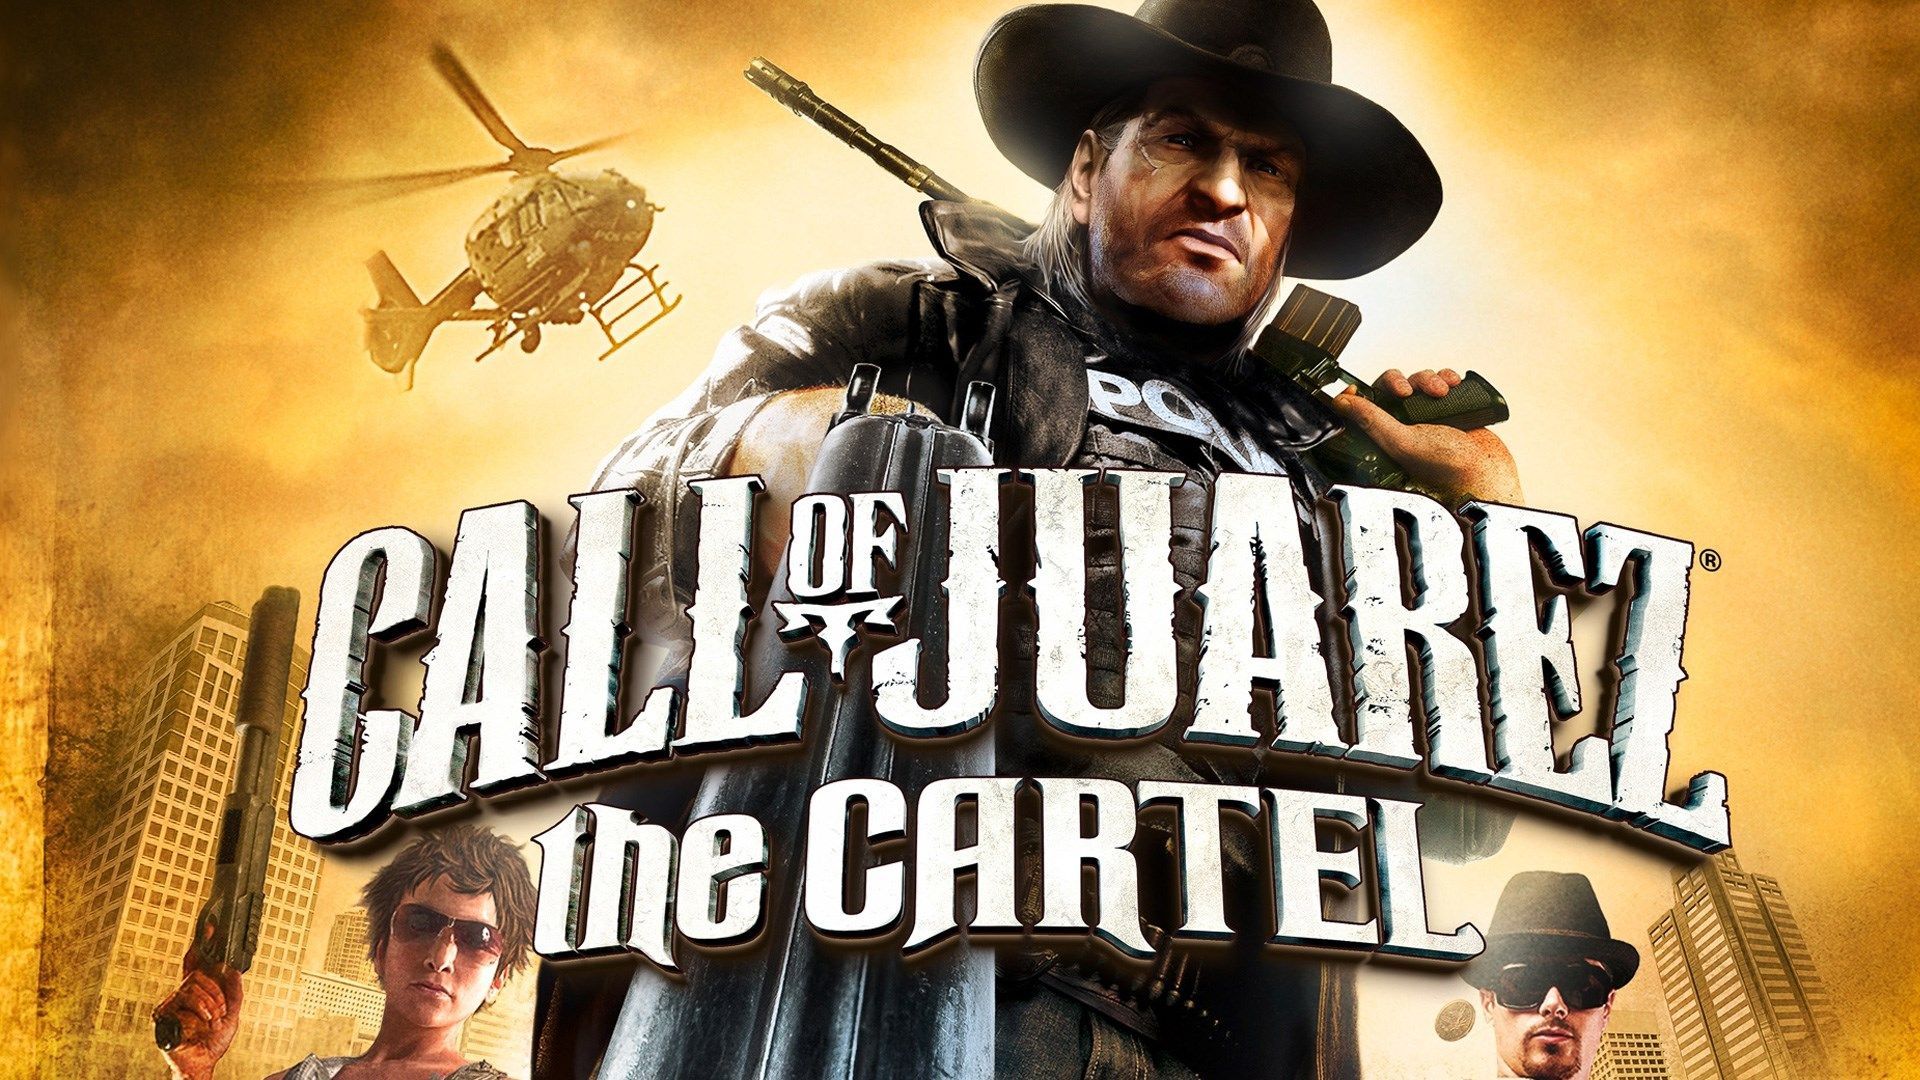 Call of Juarez: The Cartel game wallpaper. Cartel, Juarez, System requirements